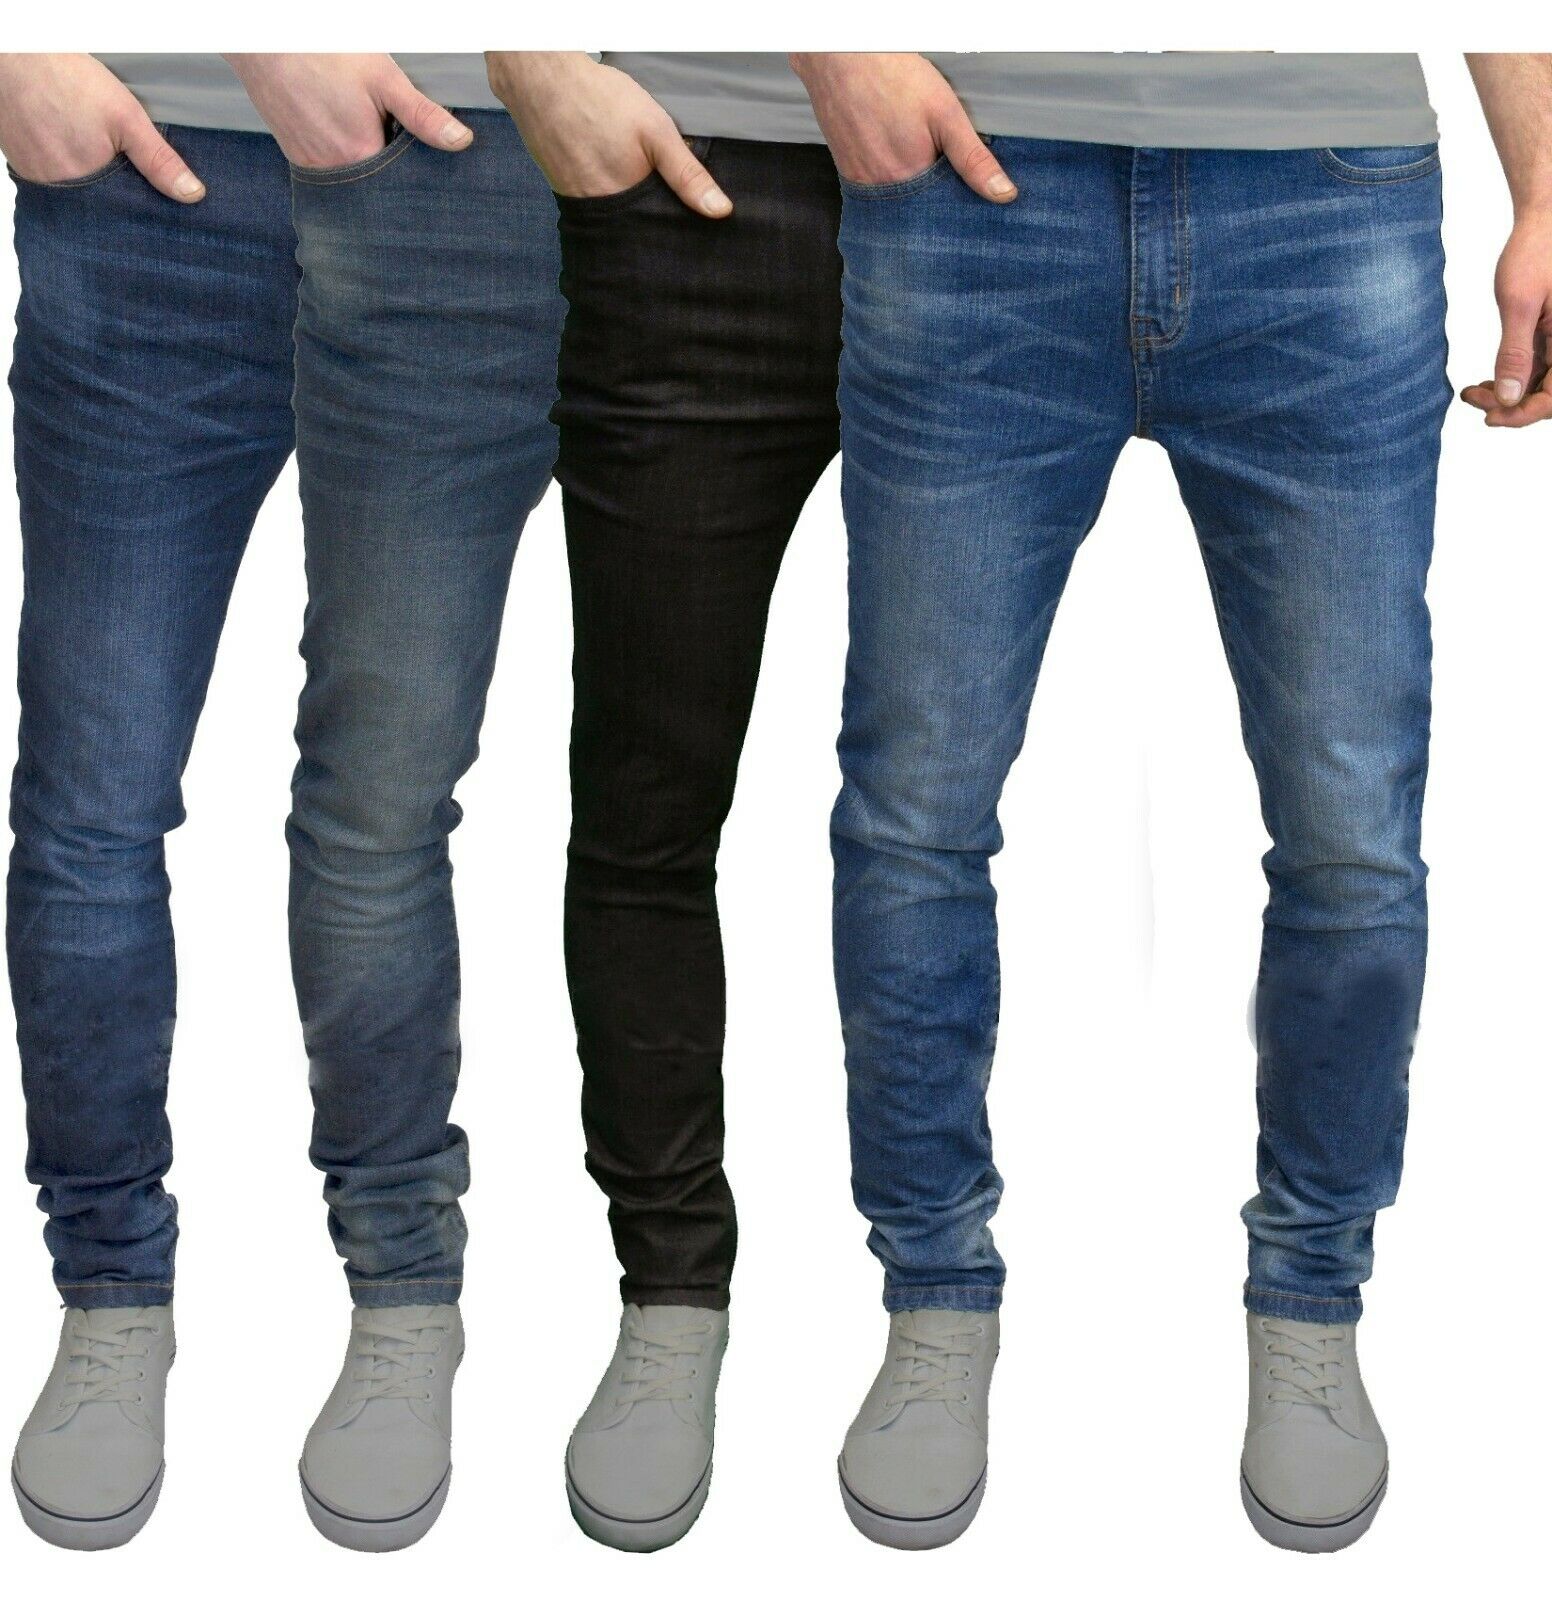 Mens Slim Fit Jeans Super Stretch Denim Pants Slim Skinny Casual Designer Jeans